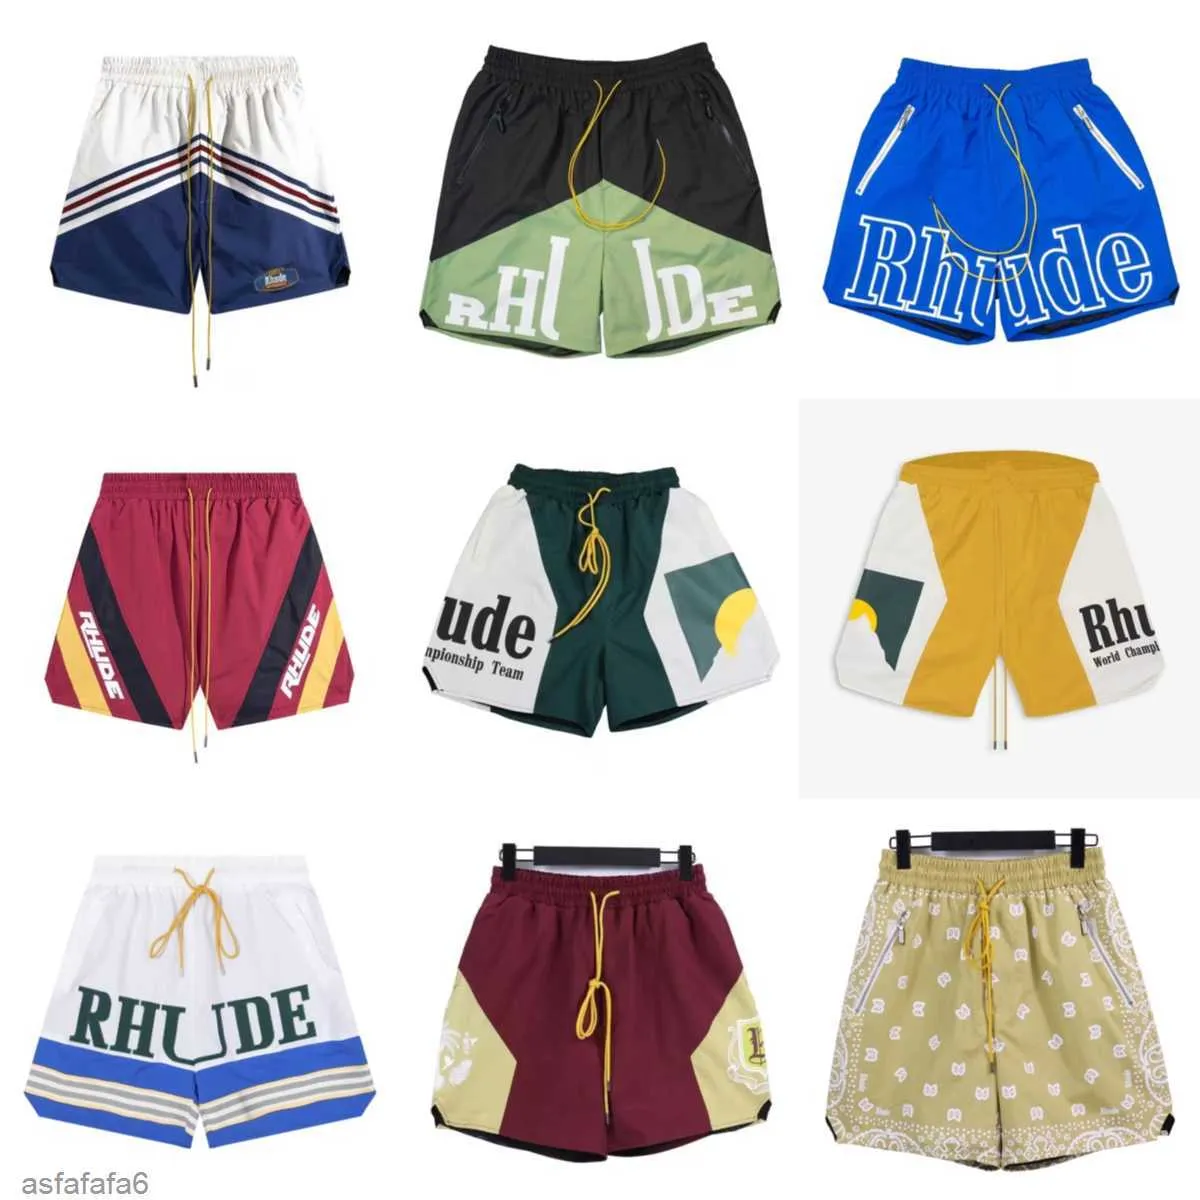 Rhude shorts heren mode strandbroek sport fitness luxe hoogwaardige zomer casual veelzijdige snelle droog ademende mesh bv3f